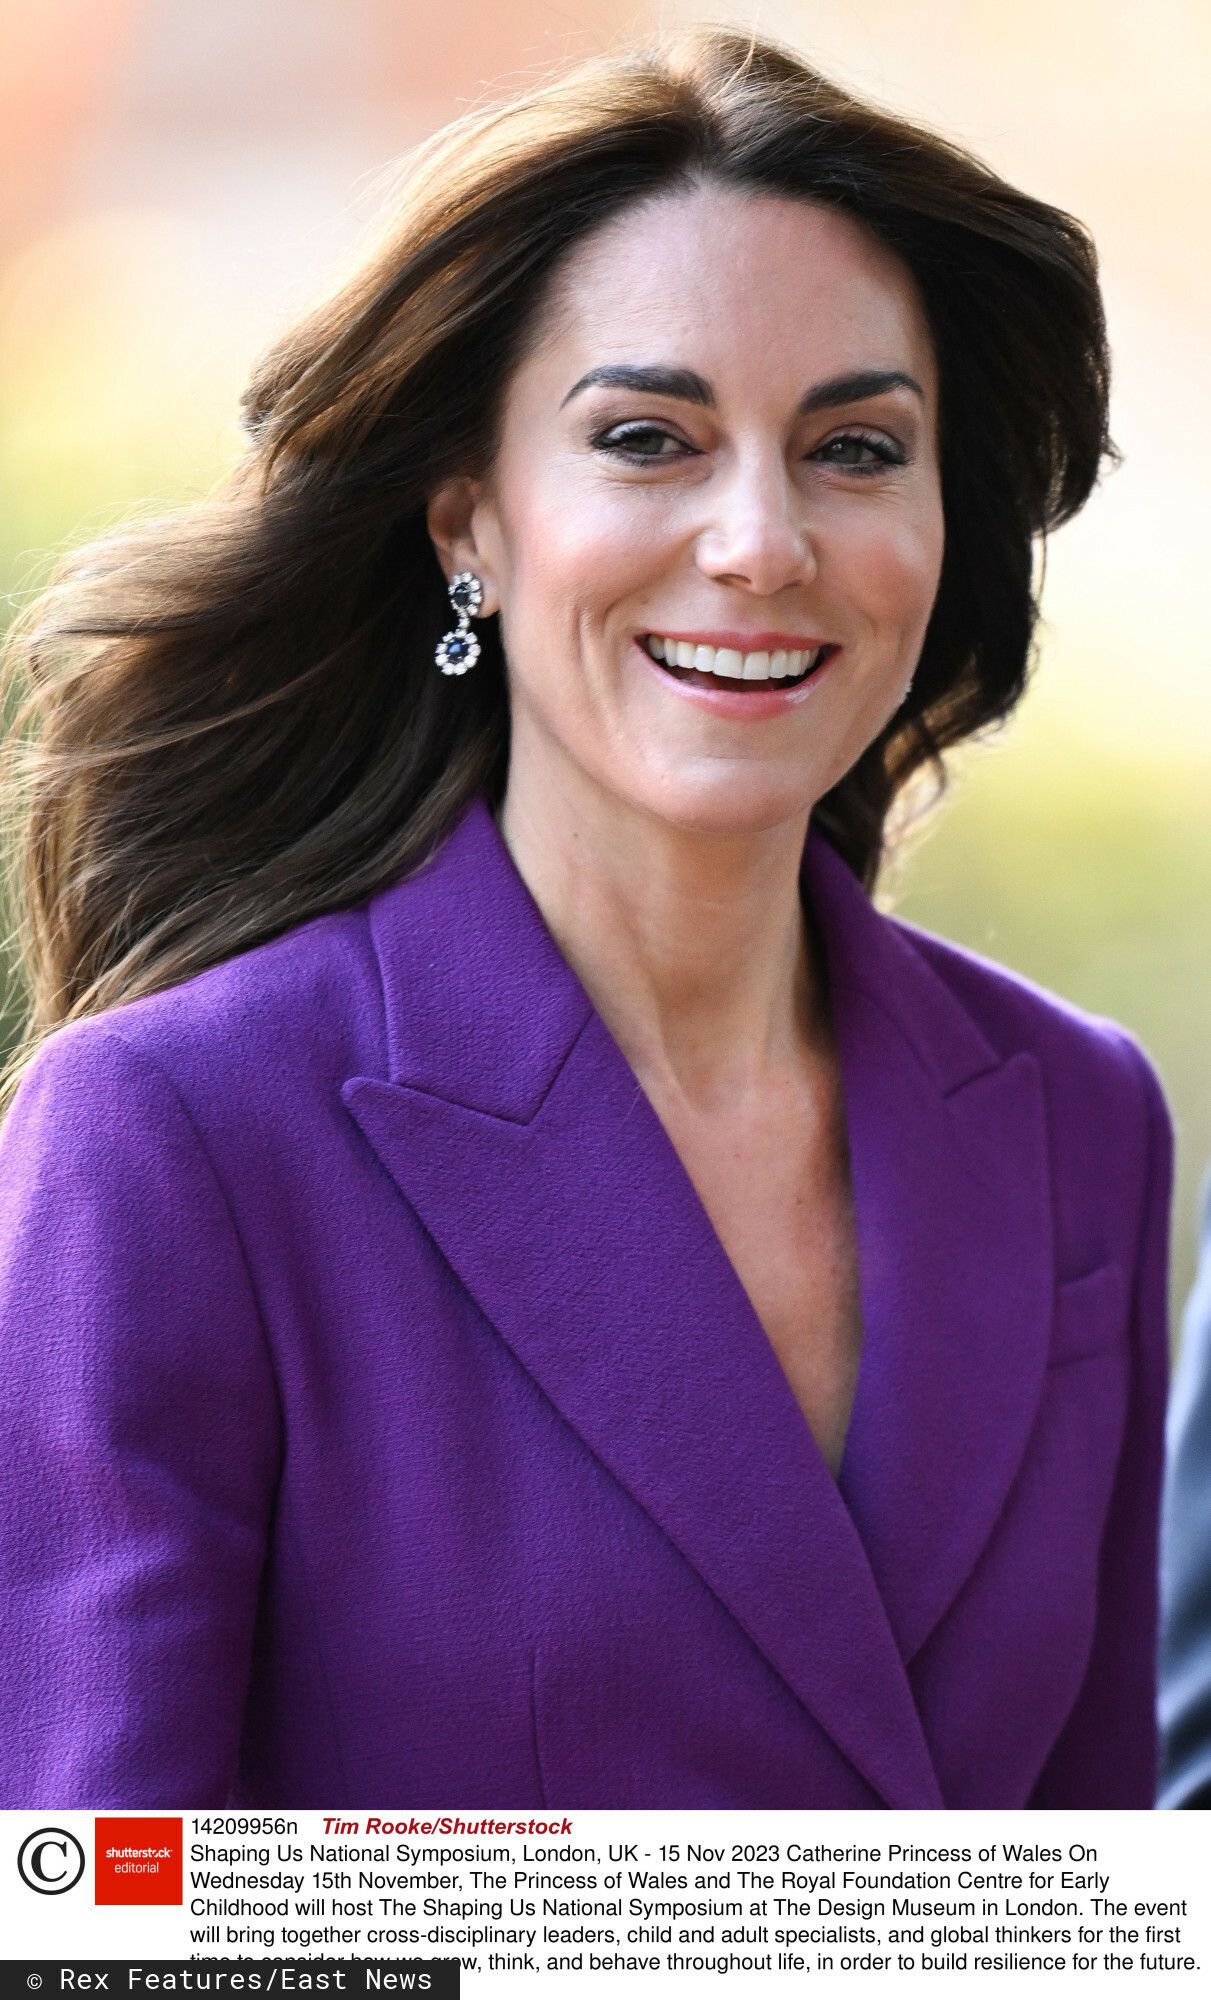 Księżna Kate Middleton, Fot. Rex FeaturesEast NewsShutterstockTim Rooke.jpg